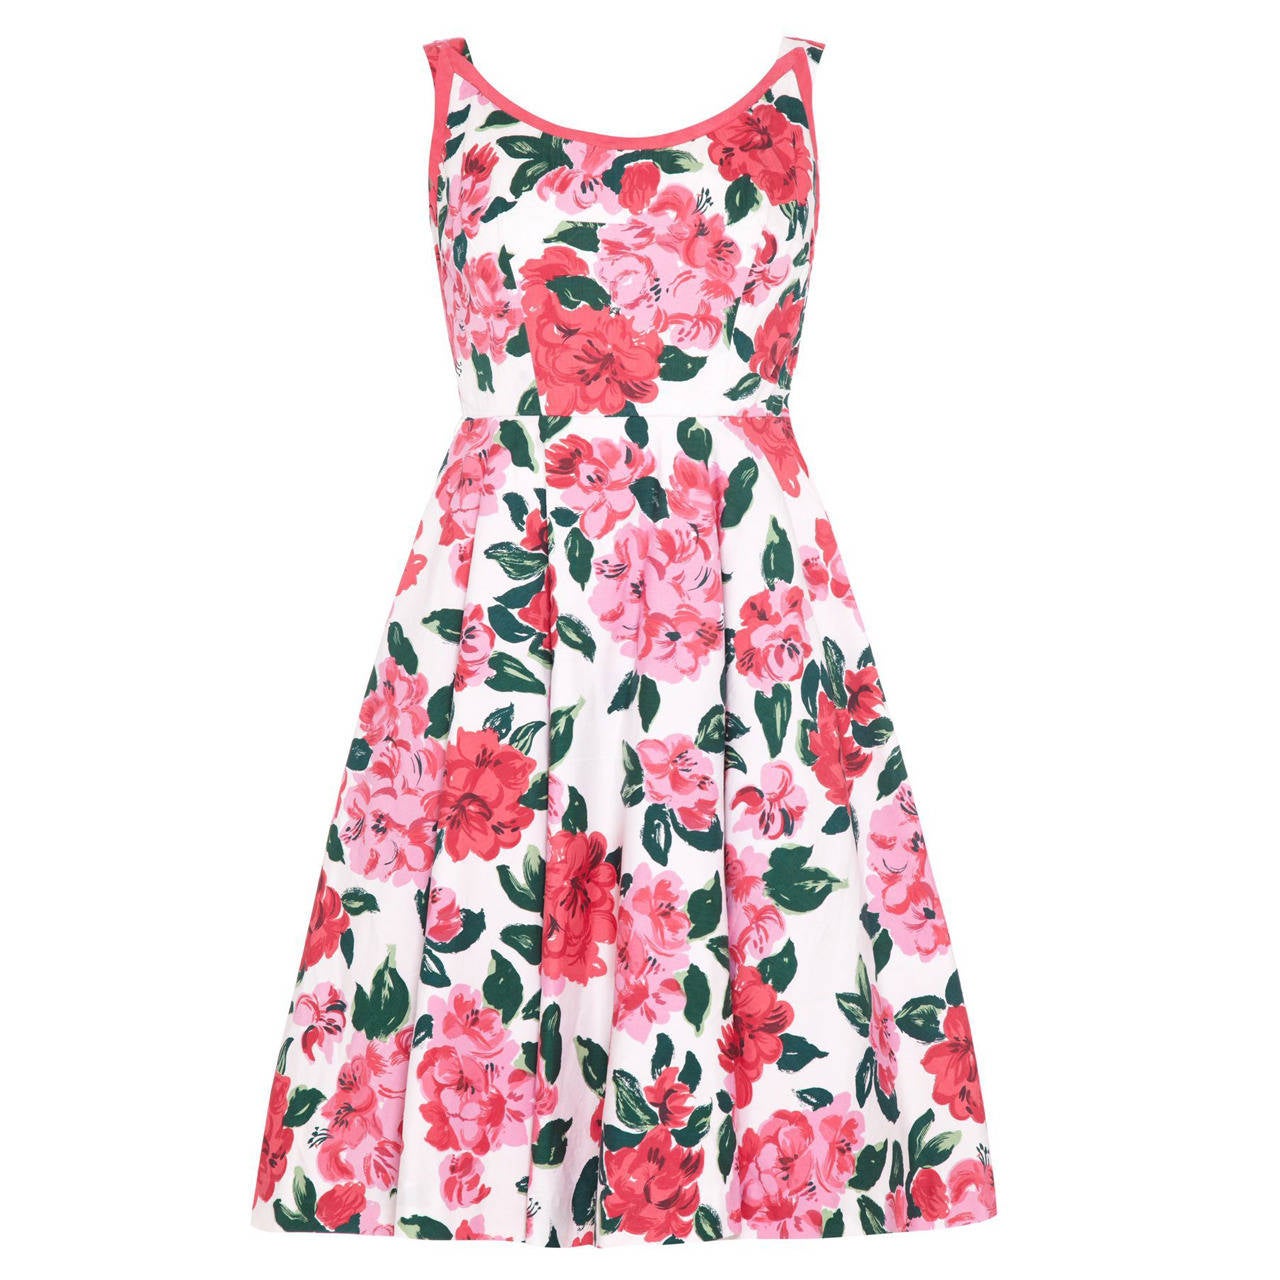 1950s Horrockses Floral Cotton Dress For Sale at 1stdibs